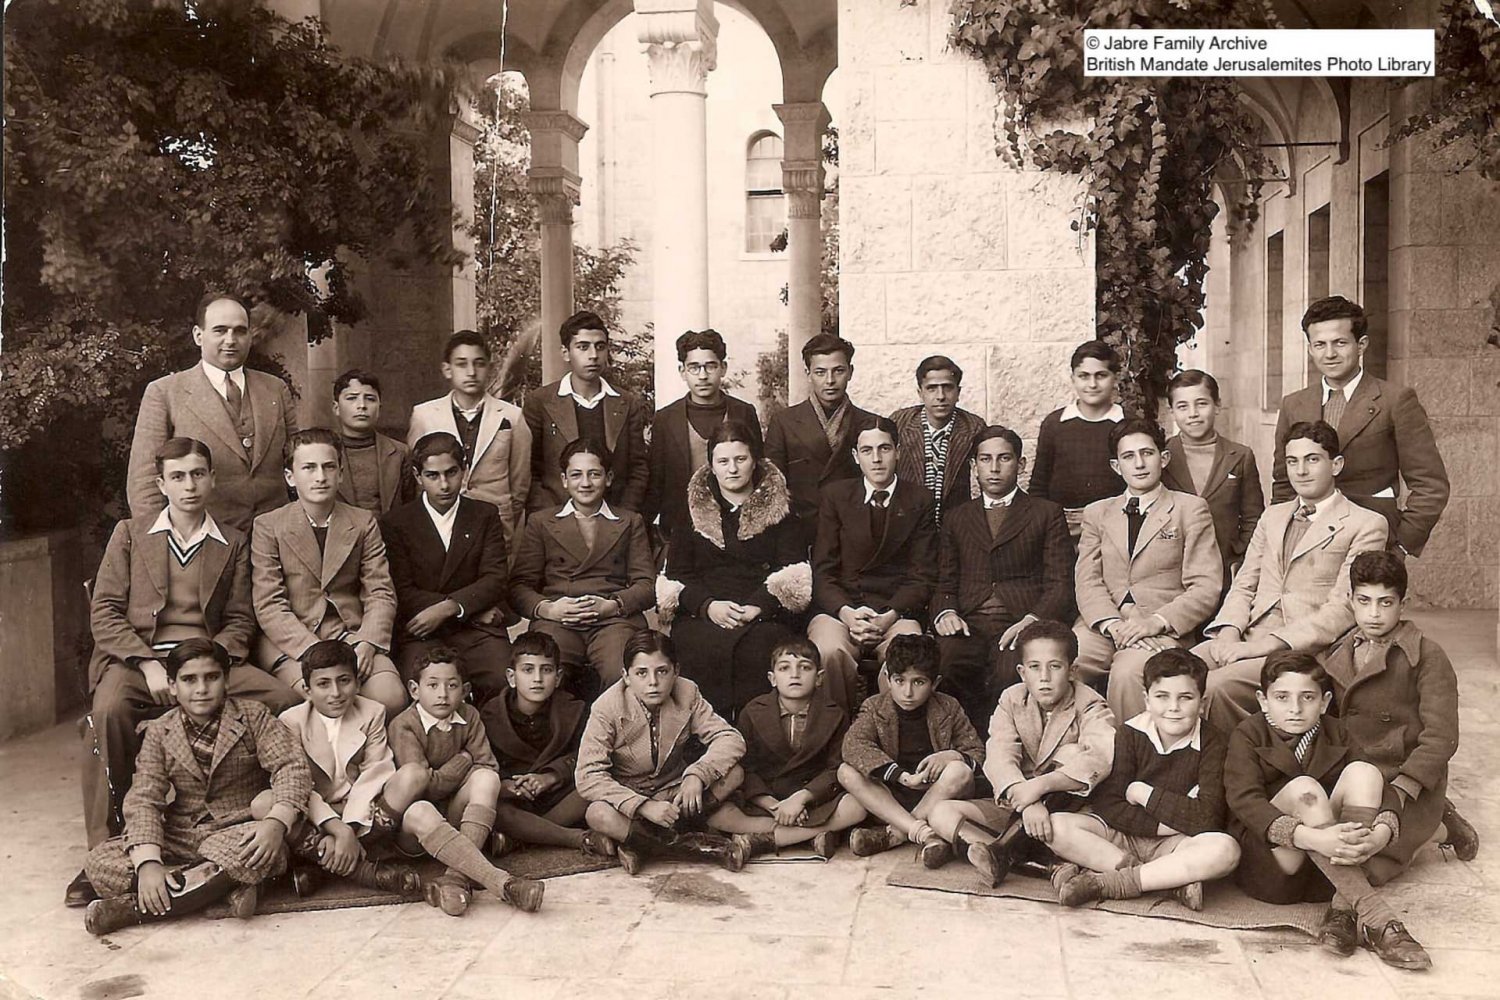 The YMCA Boys Club, Jerusalem, ca. 1935